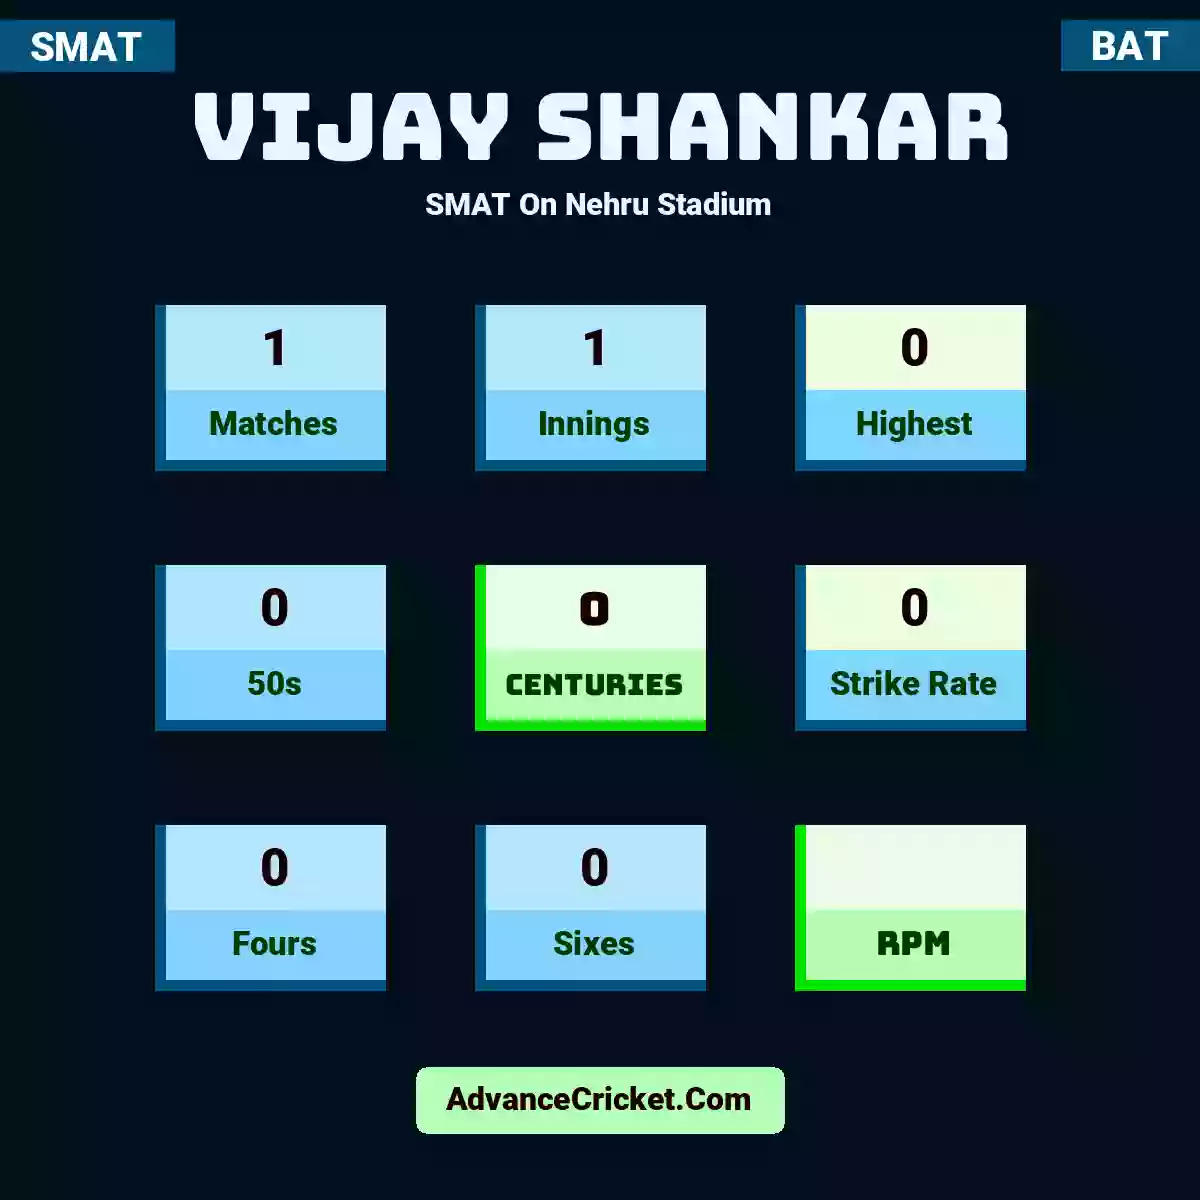 Vijay Shankar SMAT  On Nehru Stadium, Vijay Shankar played 1 matches, scored 0 runs as highest, 0 half-centuries, and 0 centuries, with a strike rate of 0. V.Shankar hit 0 fours and 0 sixes.